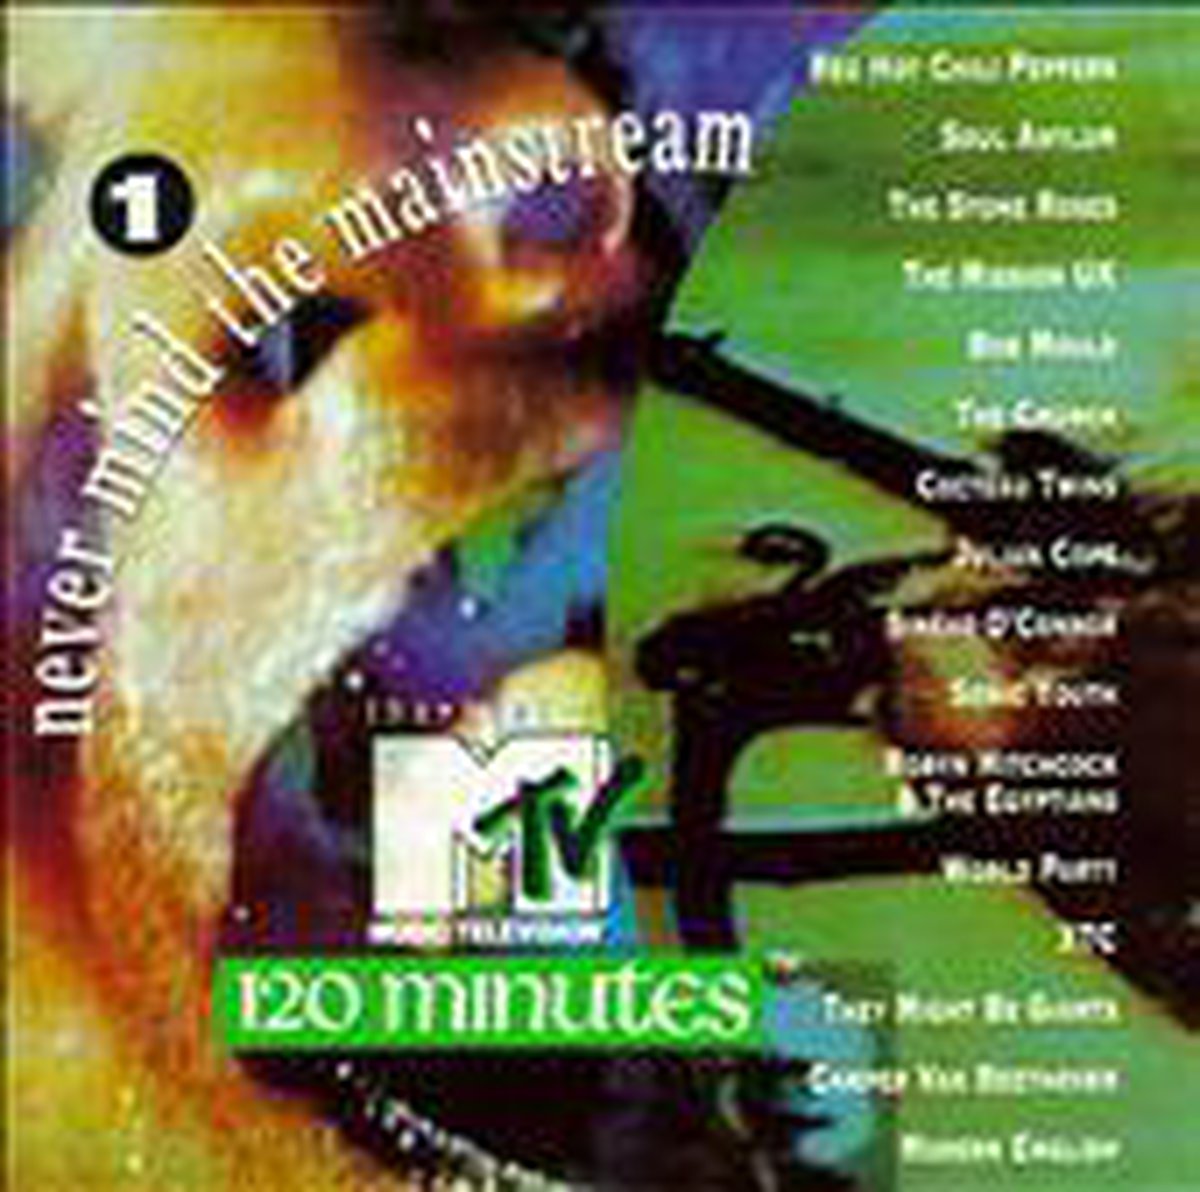 MTV: Best of 120 Minutes, Vol. 1 - various artists